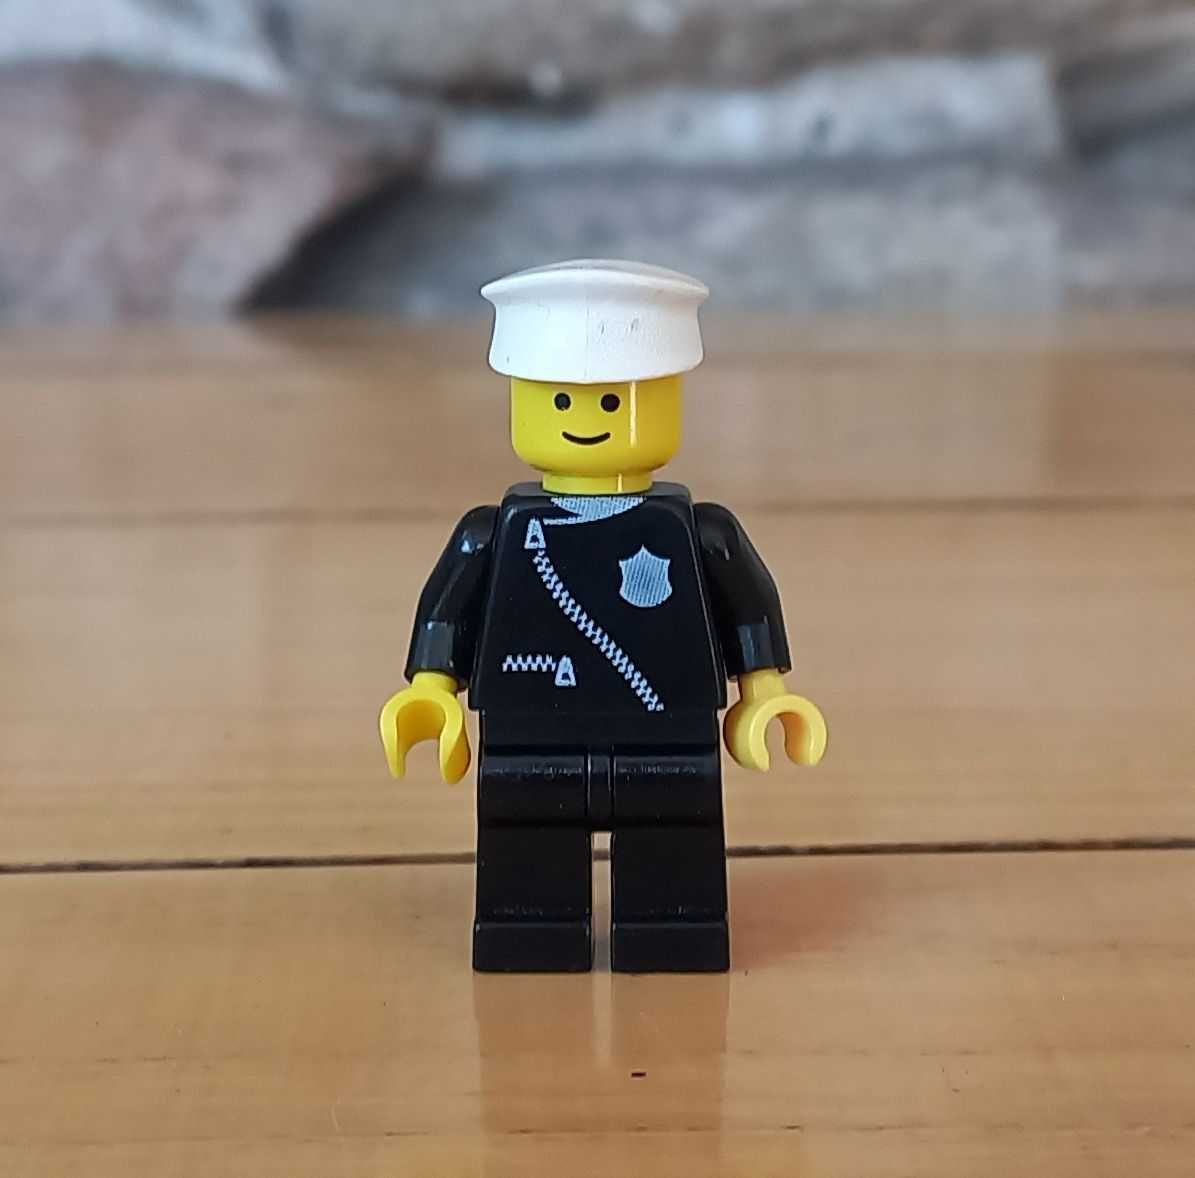 LEGO CITY - Minifigurka cop013 - Policjant